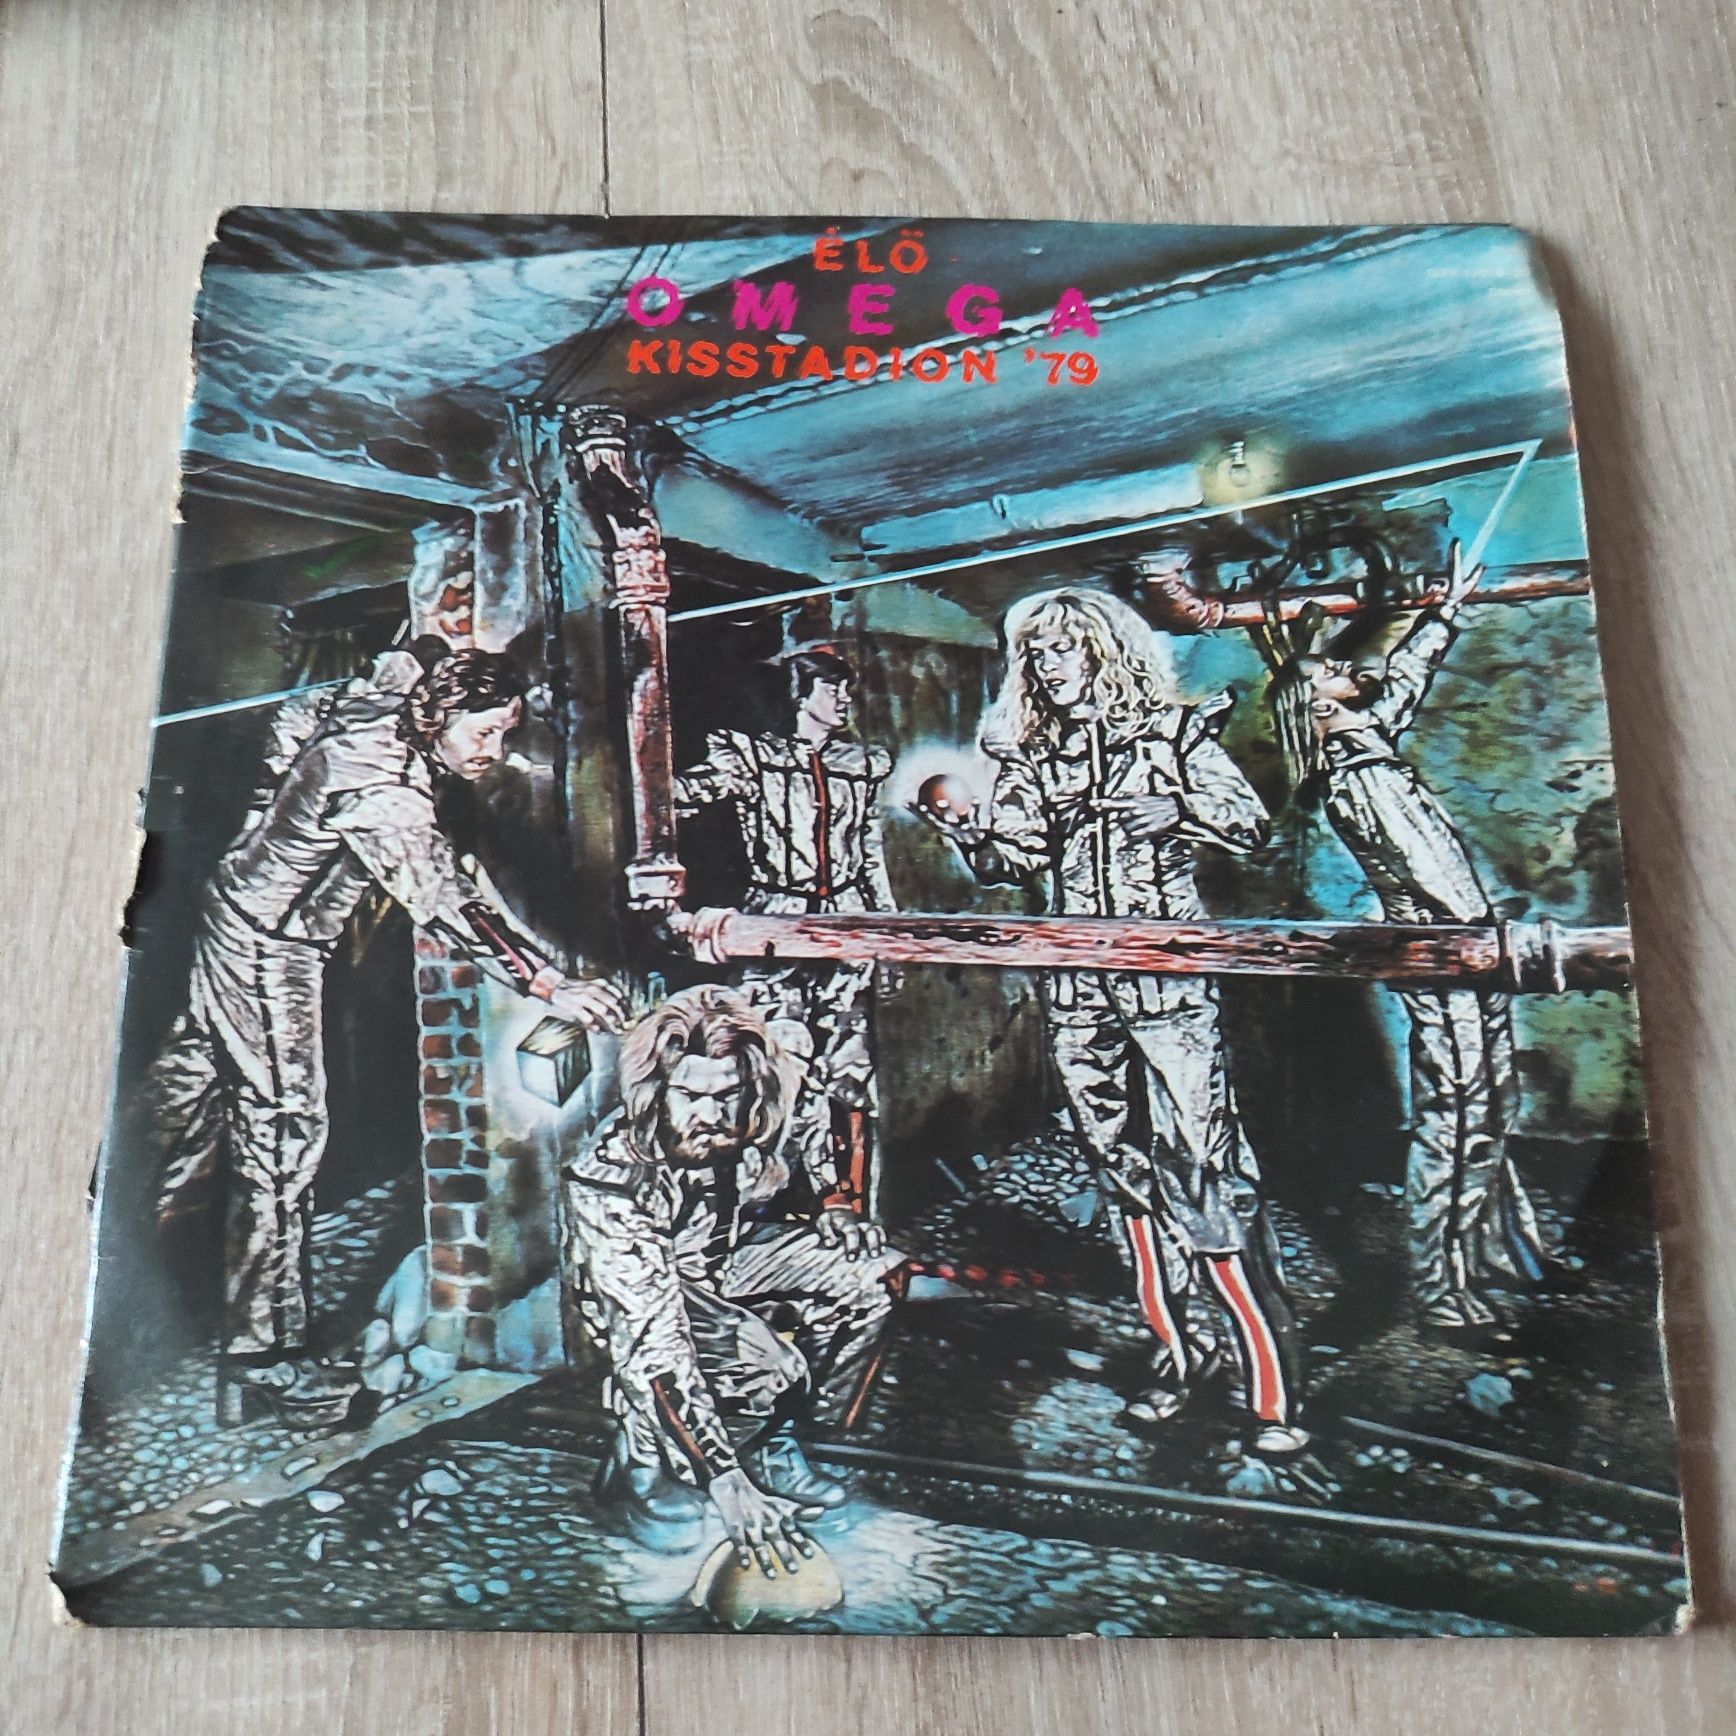 Płyta winylowa Elo, Omega "Kisstadion '79"